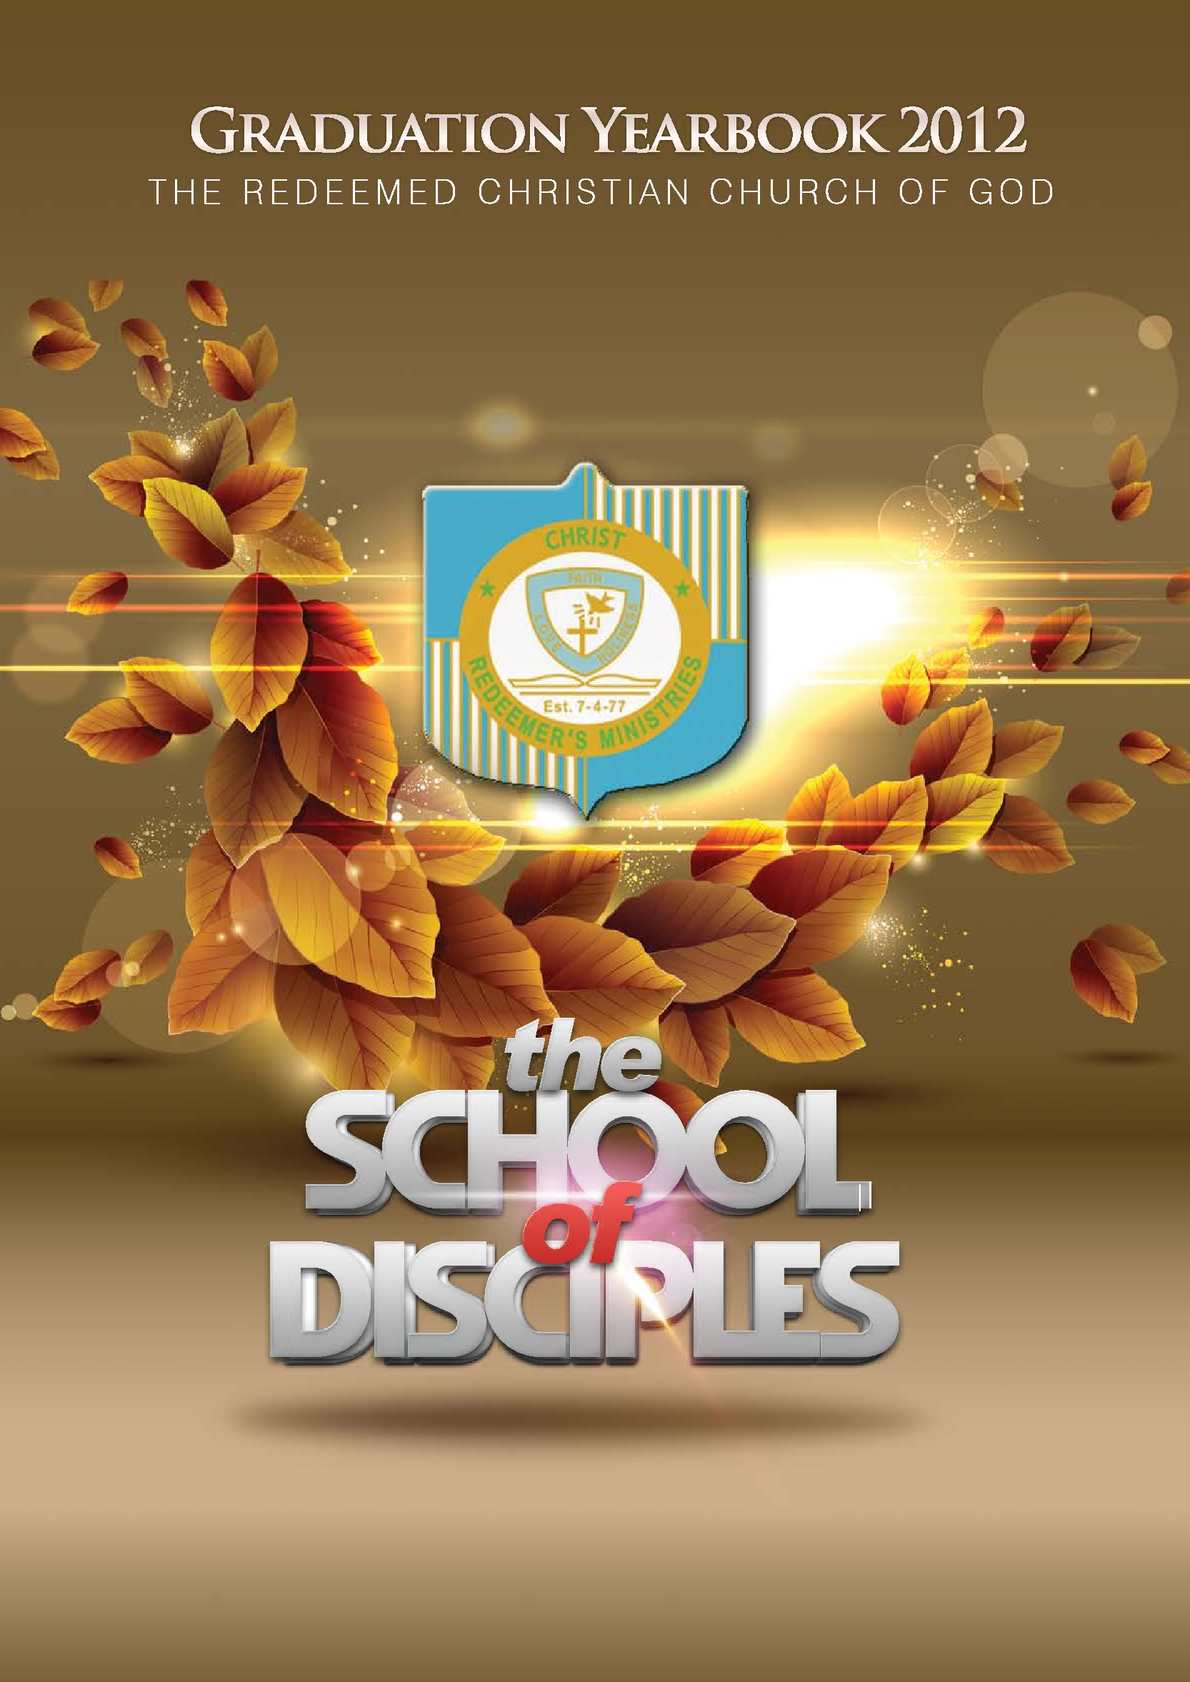 Christian Disciples Logo - Calaméo - RCCG School of disciples graduation magazine 2012